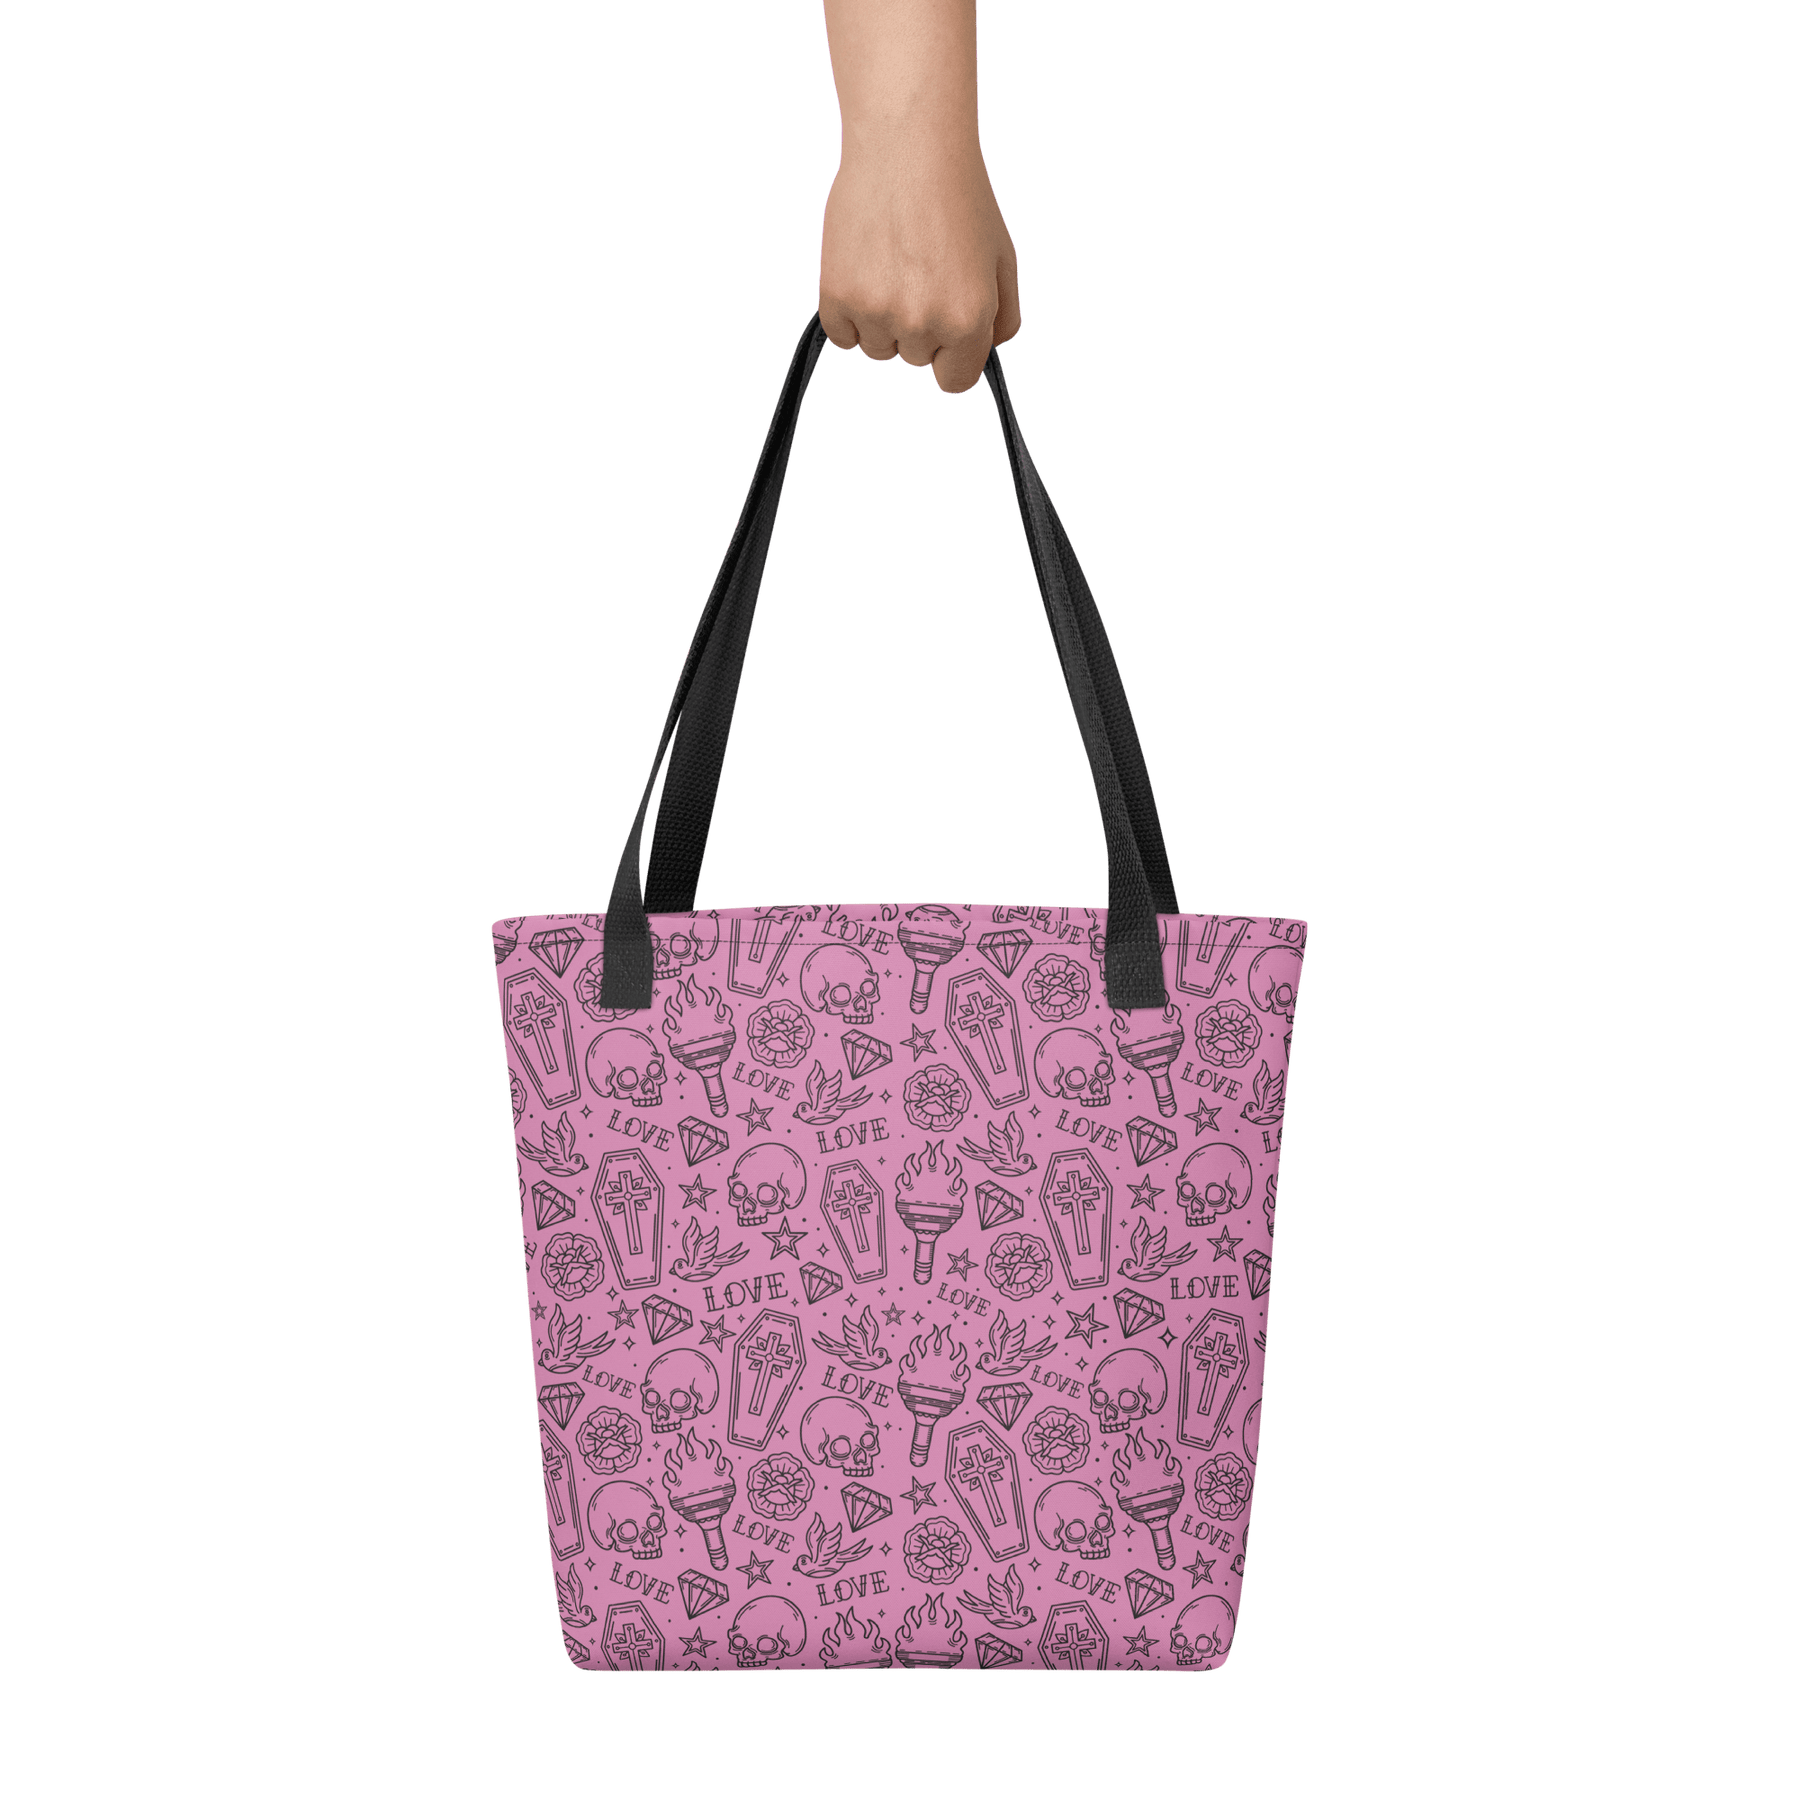 Punk in Pink Tote Bag - Goth Cloth Co.7618942_4533